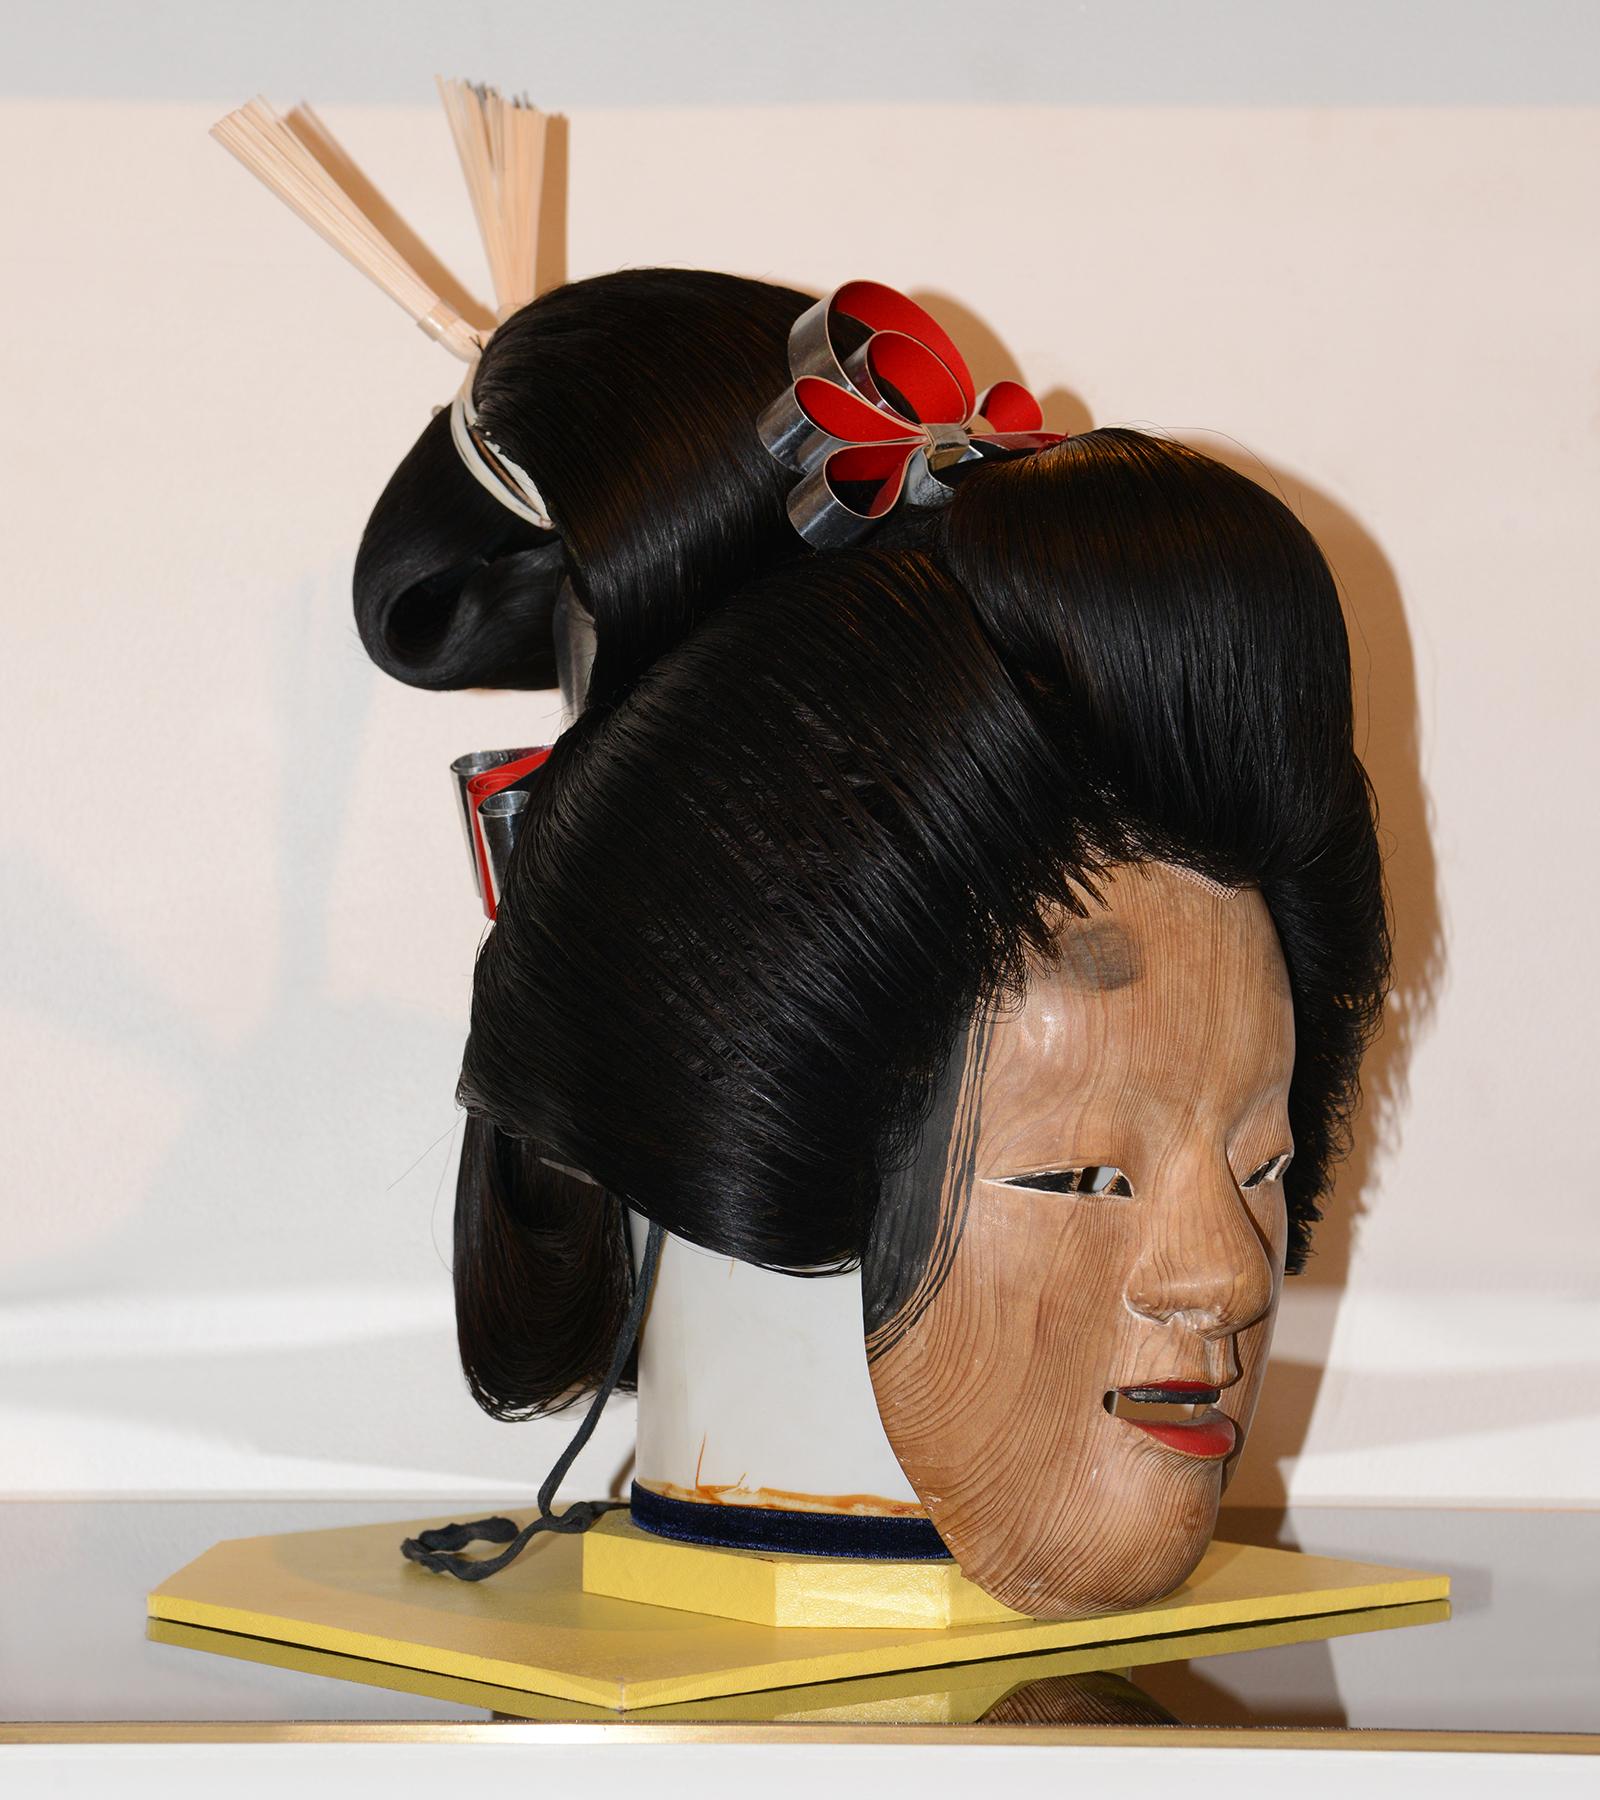 Japanese Geisha Wig & Nô Theater 2 Mask For Sale